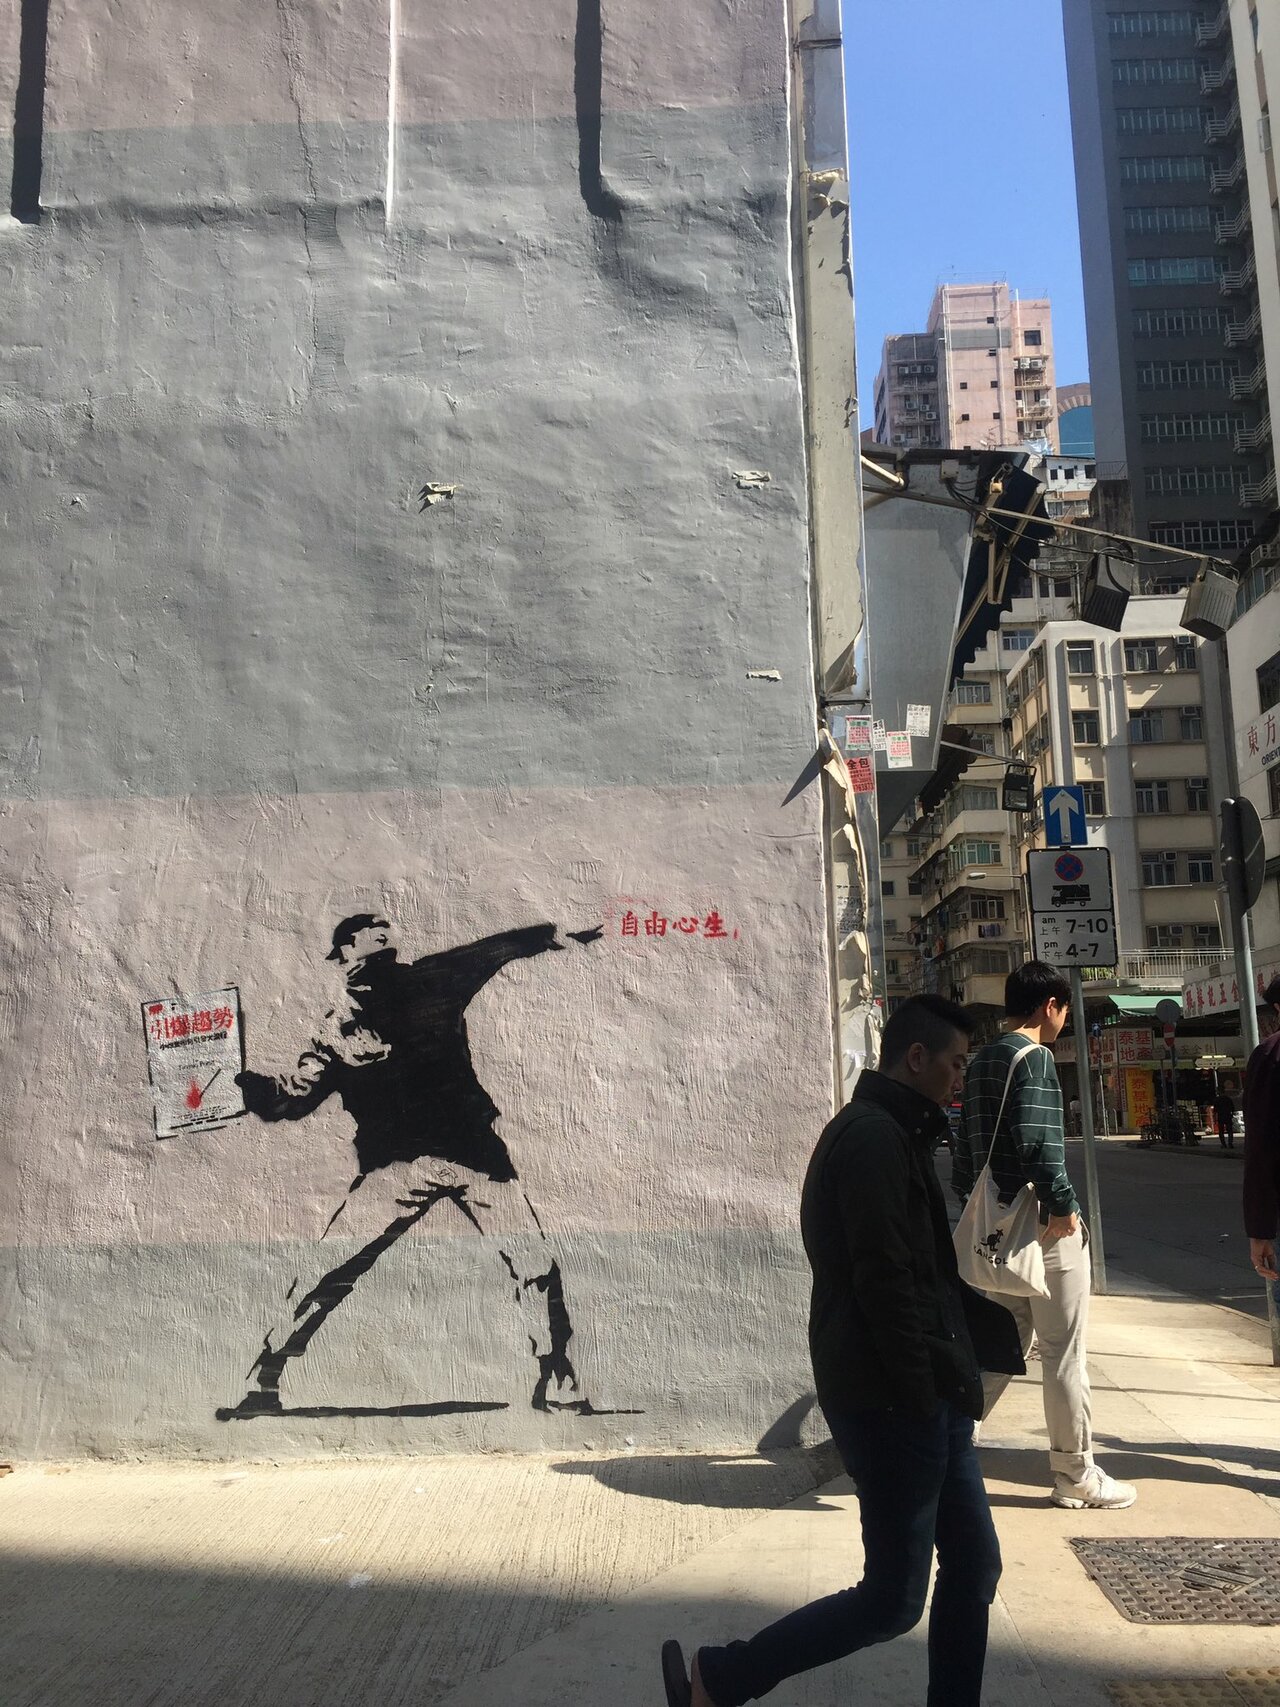 Spotted this #graffiti in Mongkok. #HongKong #art #streetart https://t.co/I3nddQIWYy